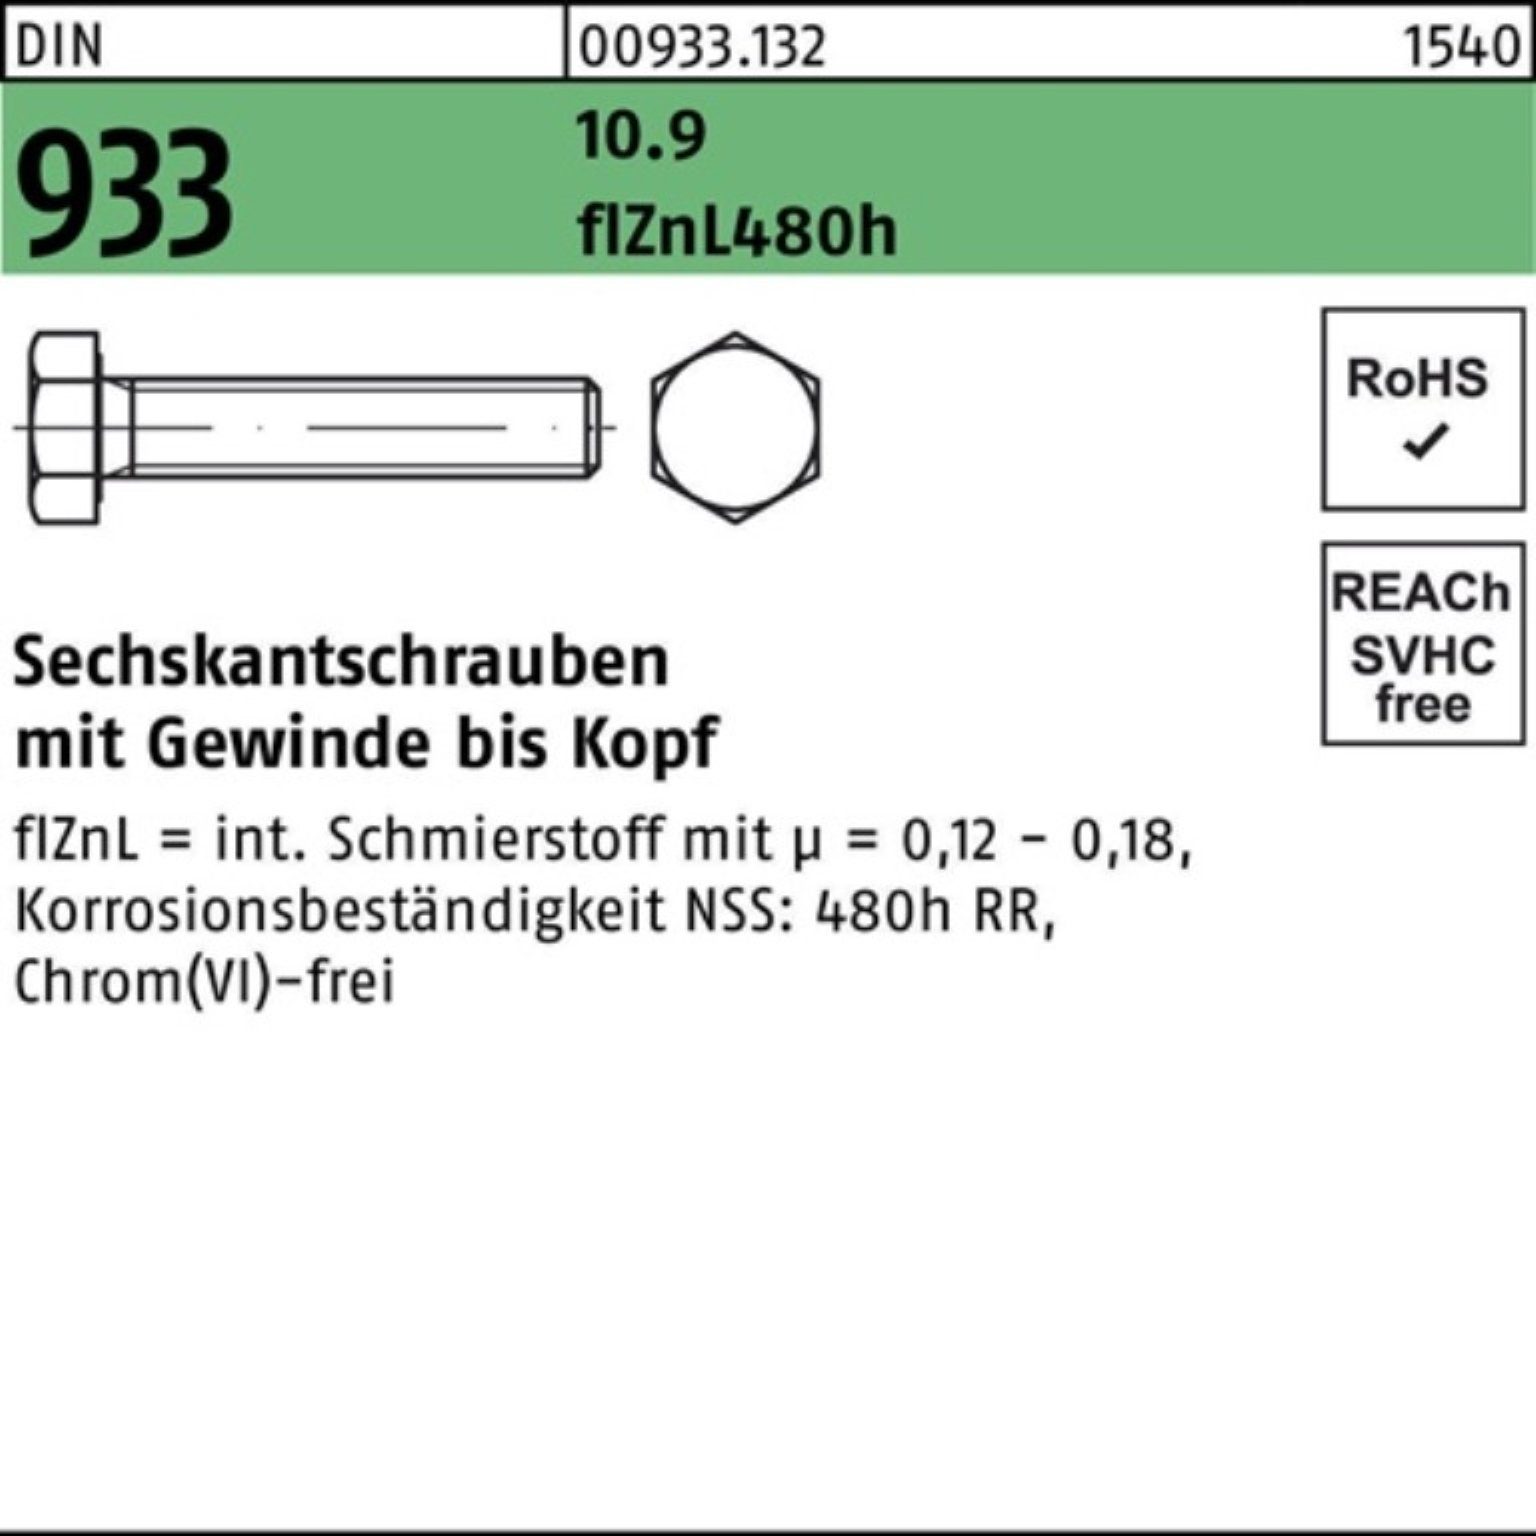 flZnL/nc/x/x/480 Sechskantschraube Reyher VG 100er DIN M20x 110 Pack 10.9 Sechskantschraube 933